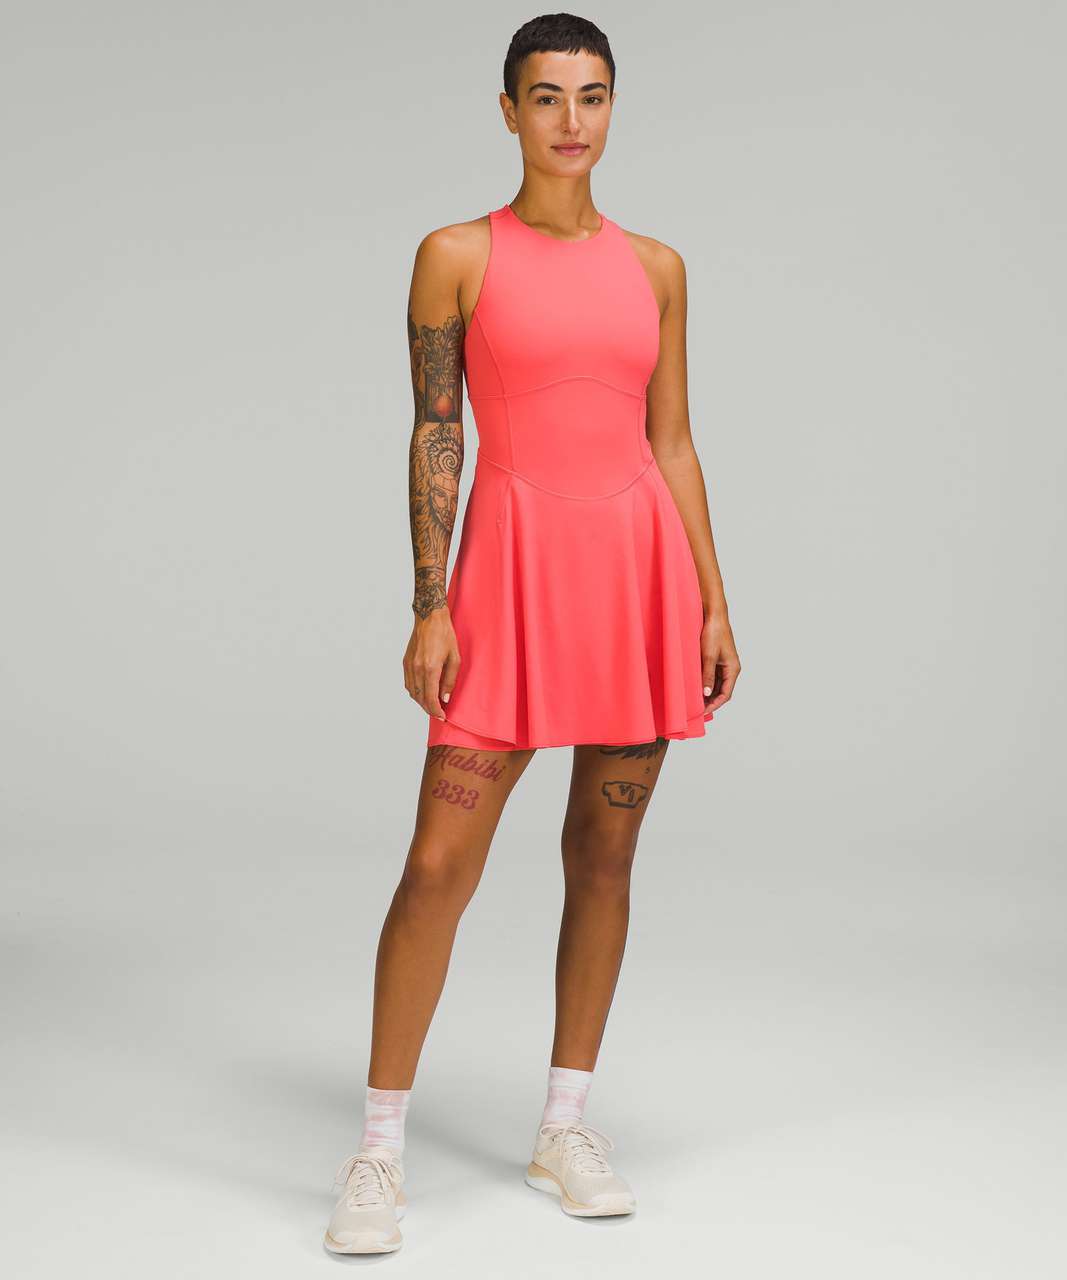 Lululemon Court Crush Tennis Dress - Pale Raspberry